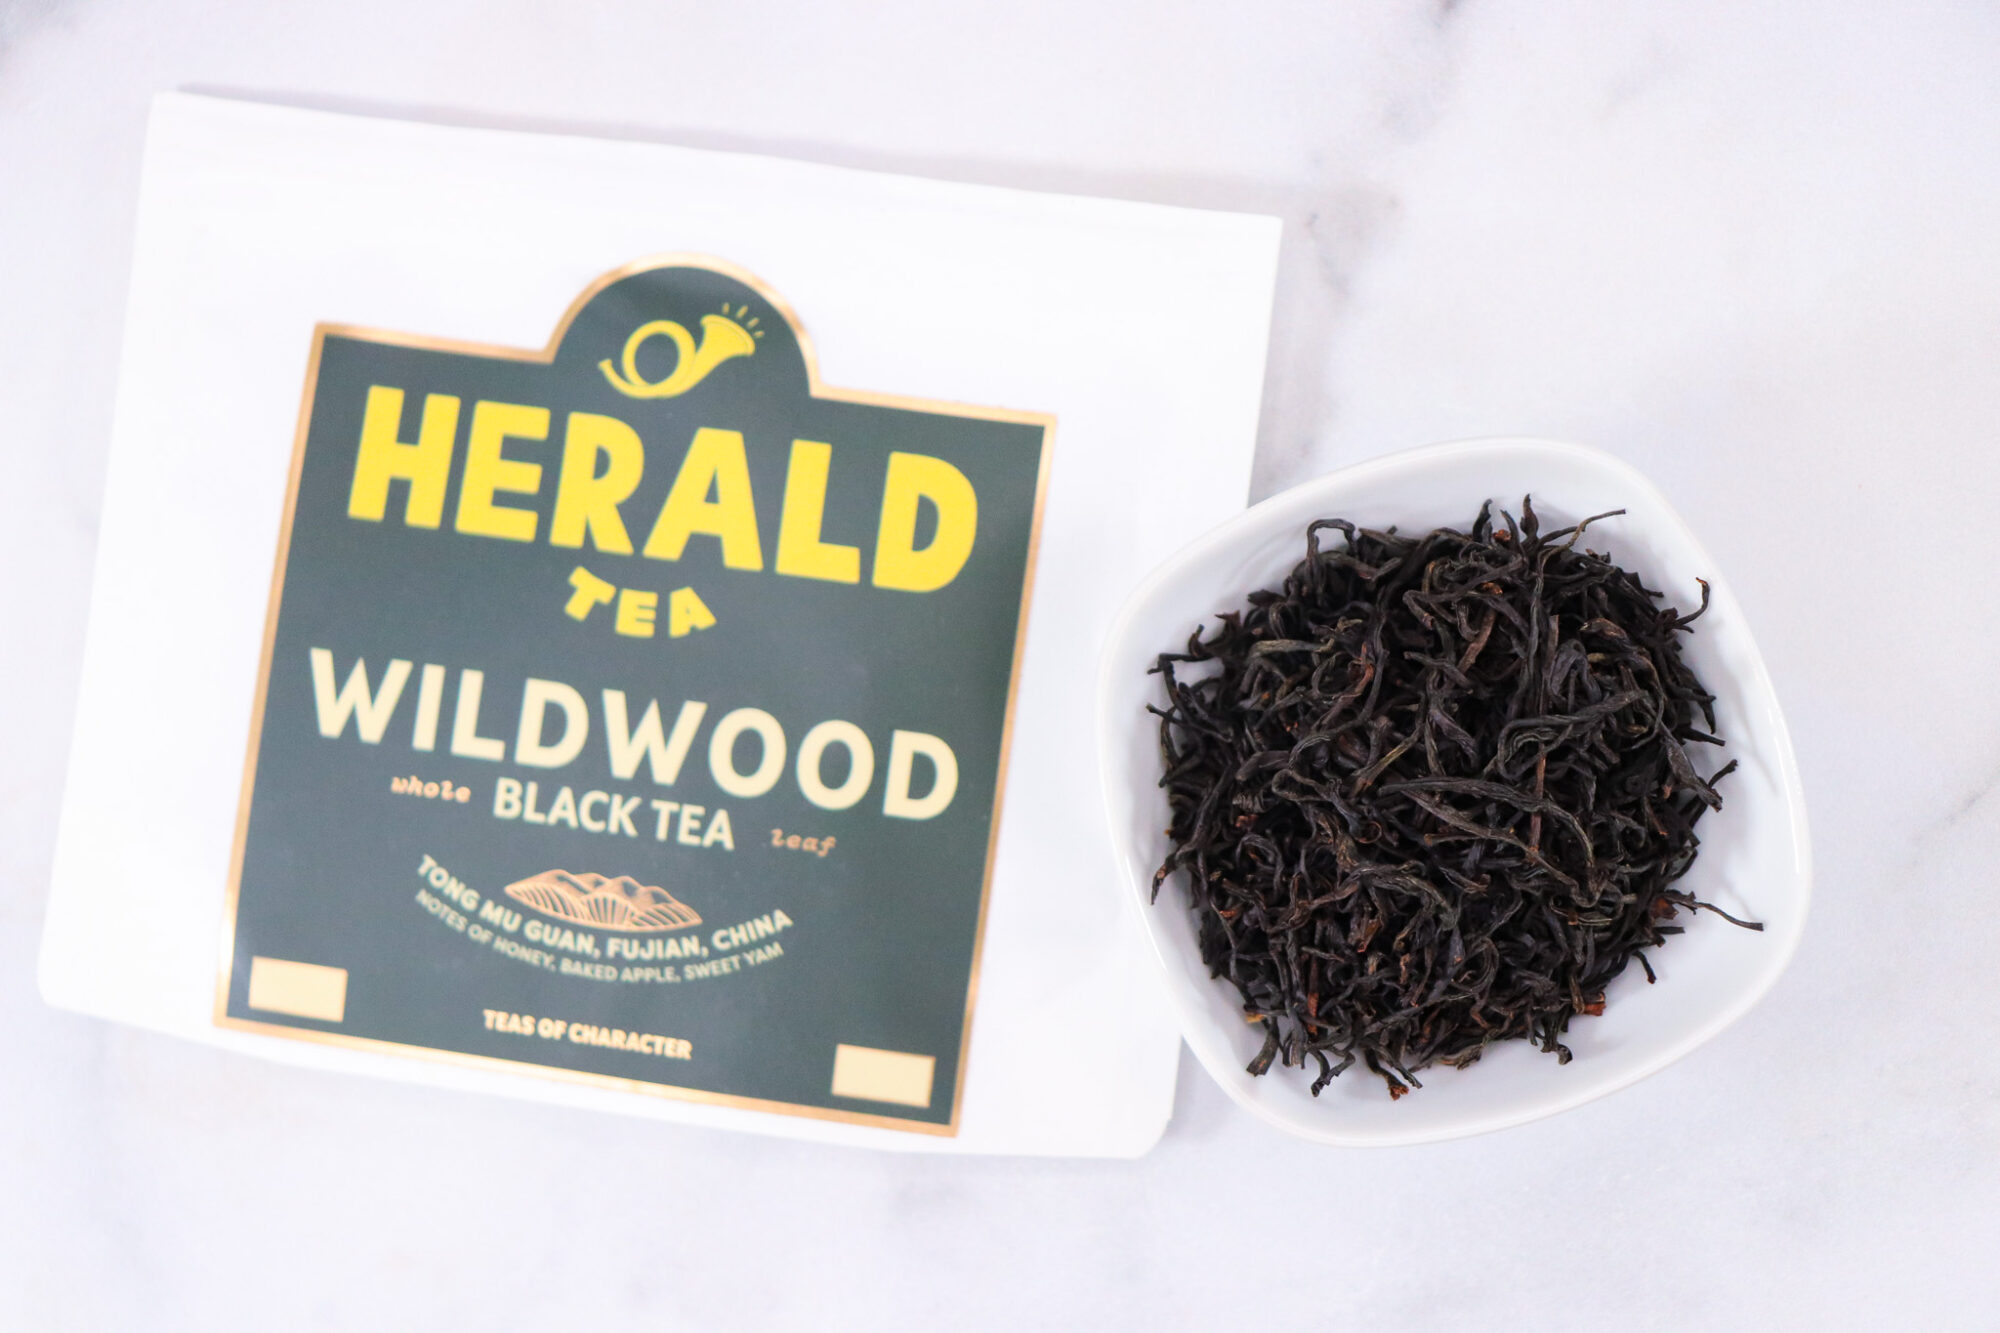 Herald Tea Wildwood Black Tea